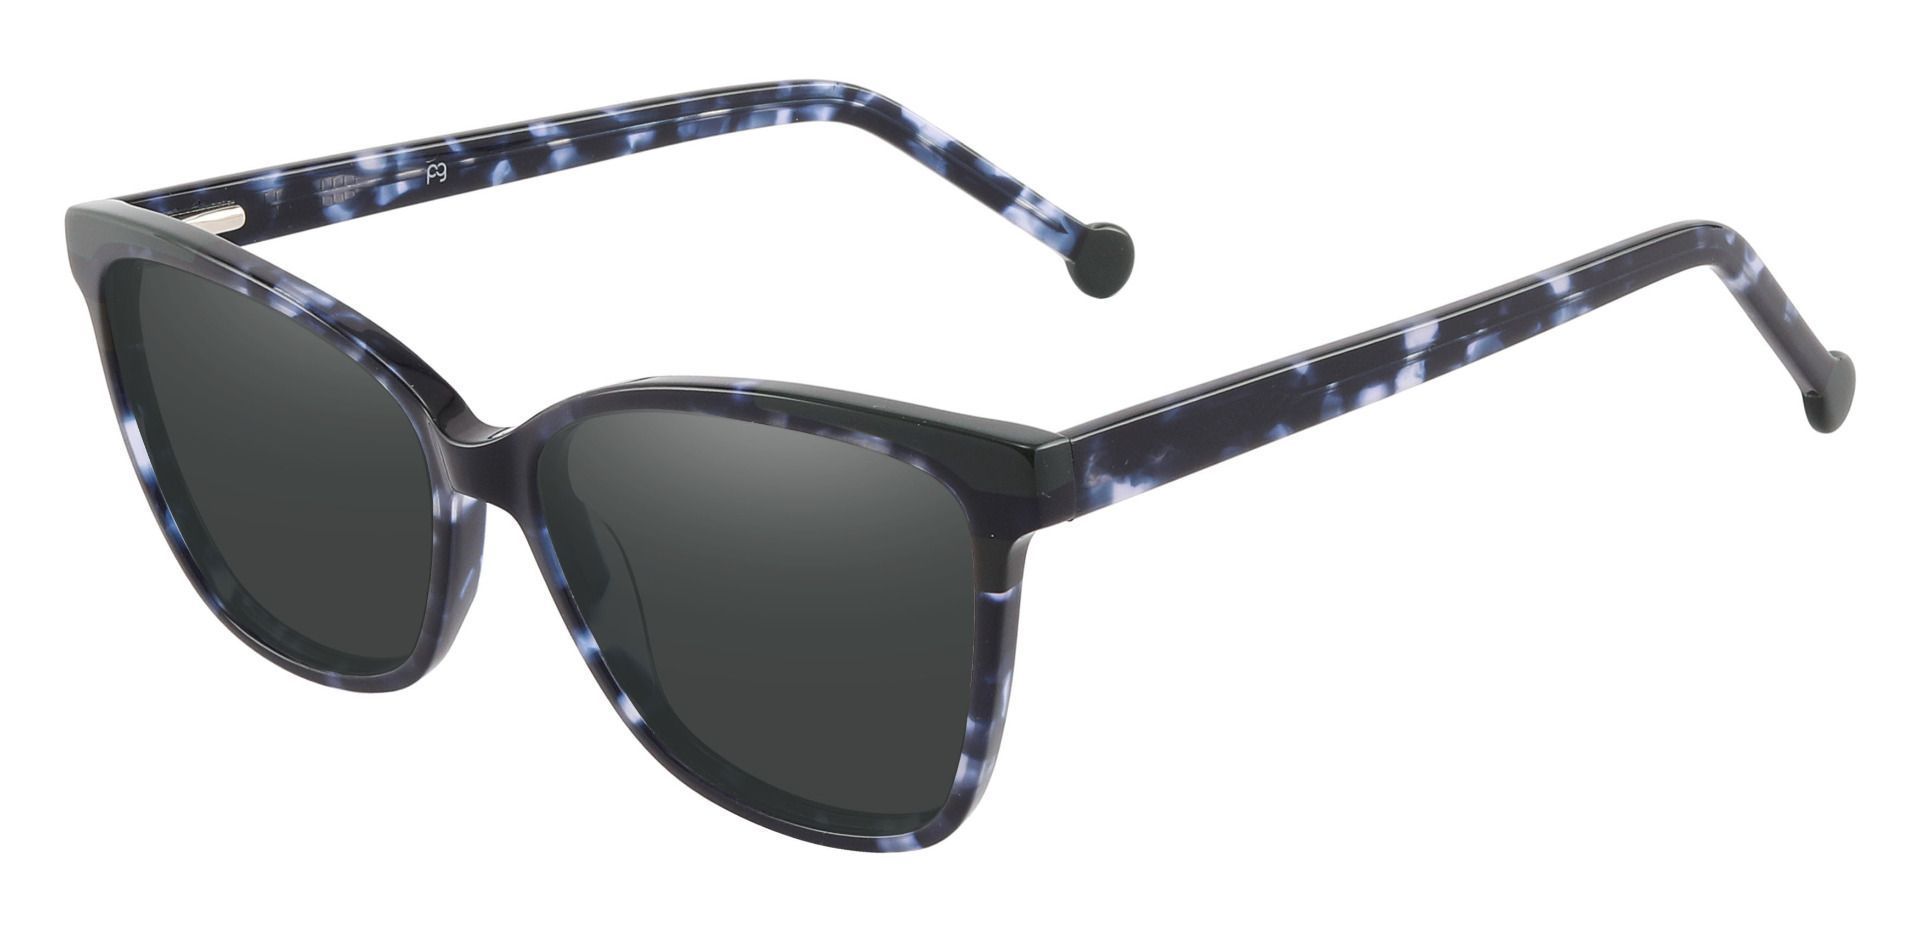 Shania Cat Eye Prescription Sunglasses - Multi Color Frame With Gray Lenses